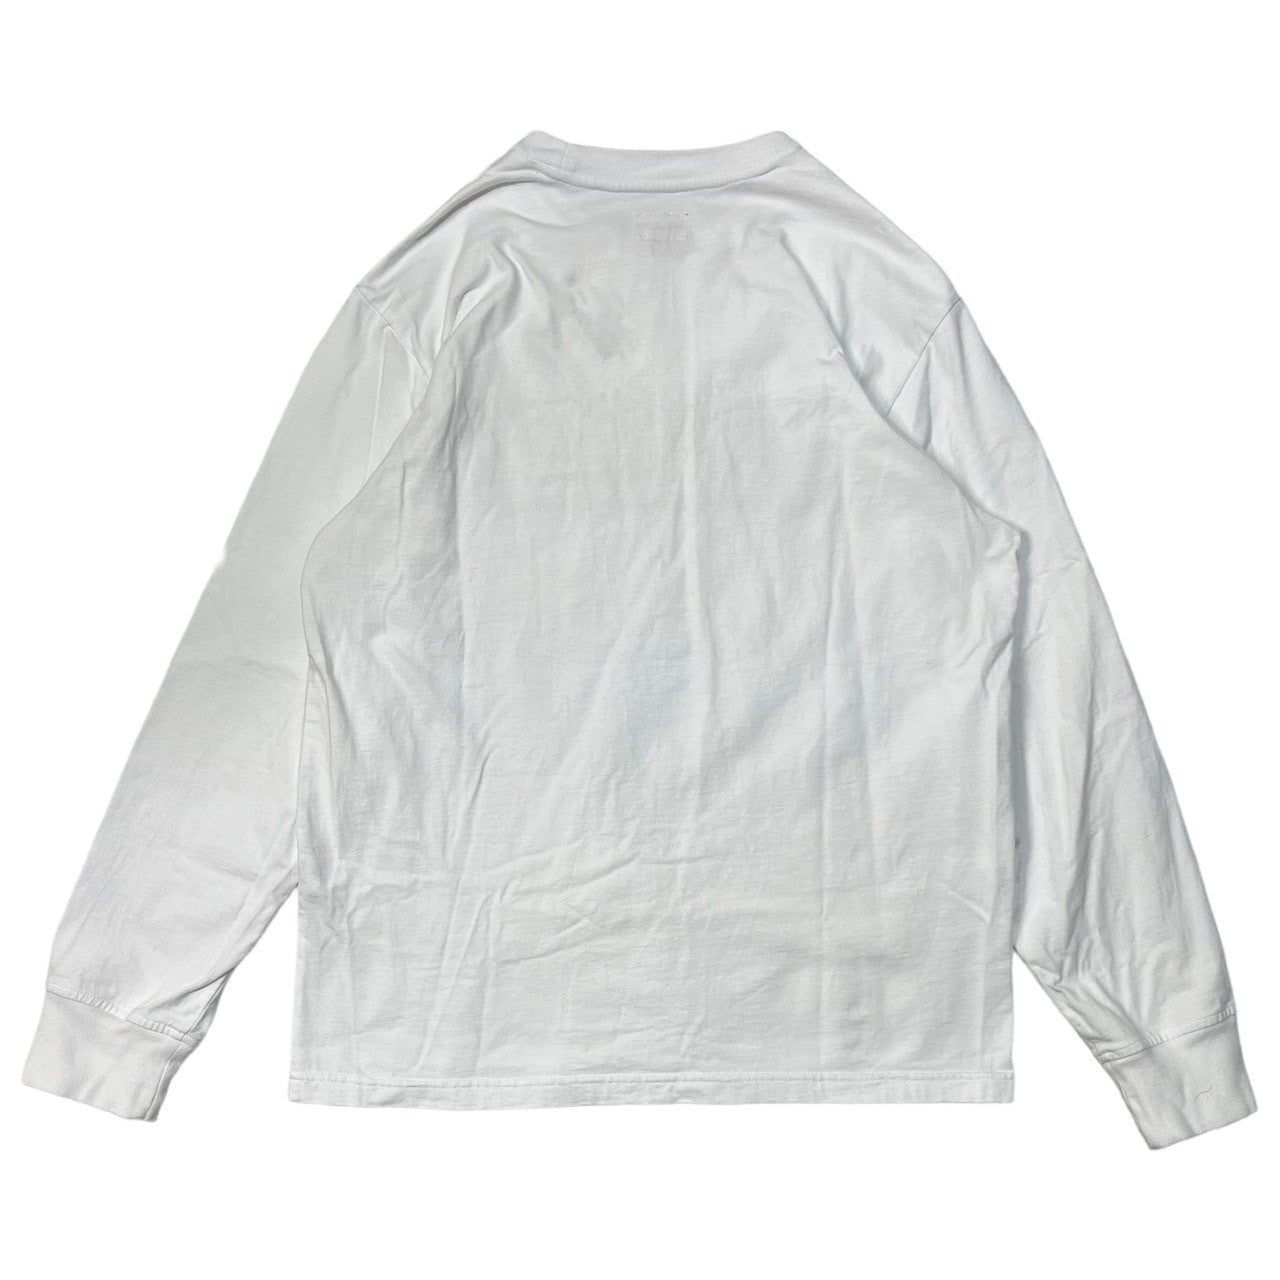 SUPREME(シュプリーム) 20SS Studded L/S Top Tee スタッズ ロゴ ロンT 長袖 カットソー Tシャツ S ホワイト